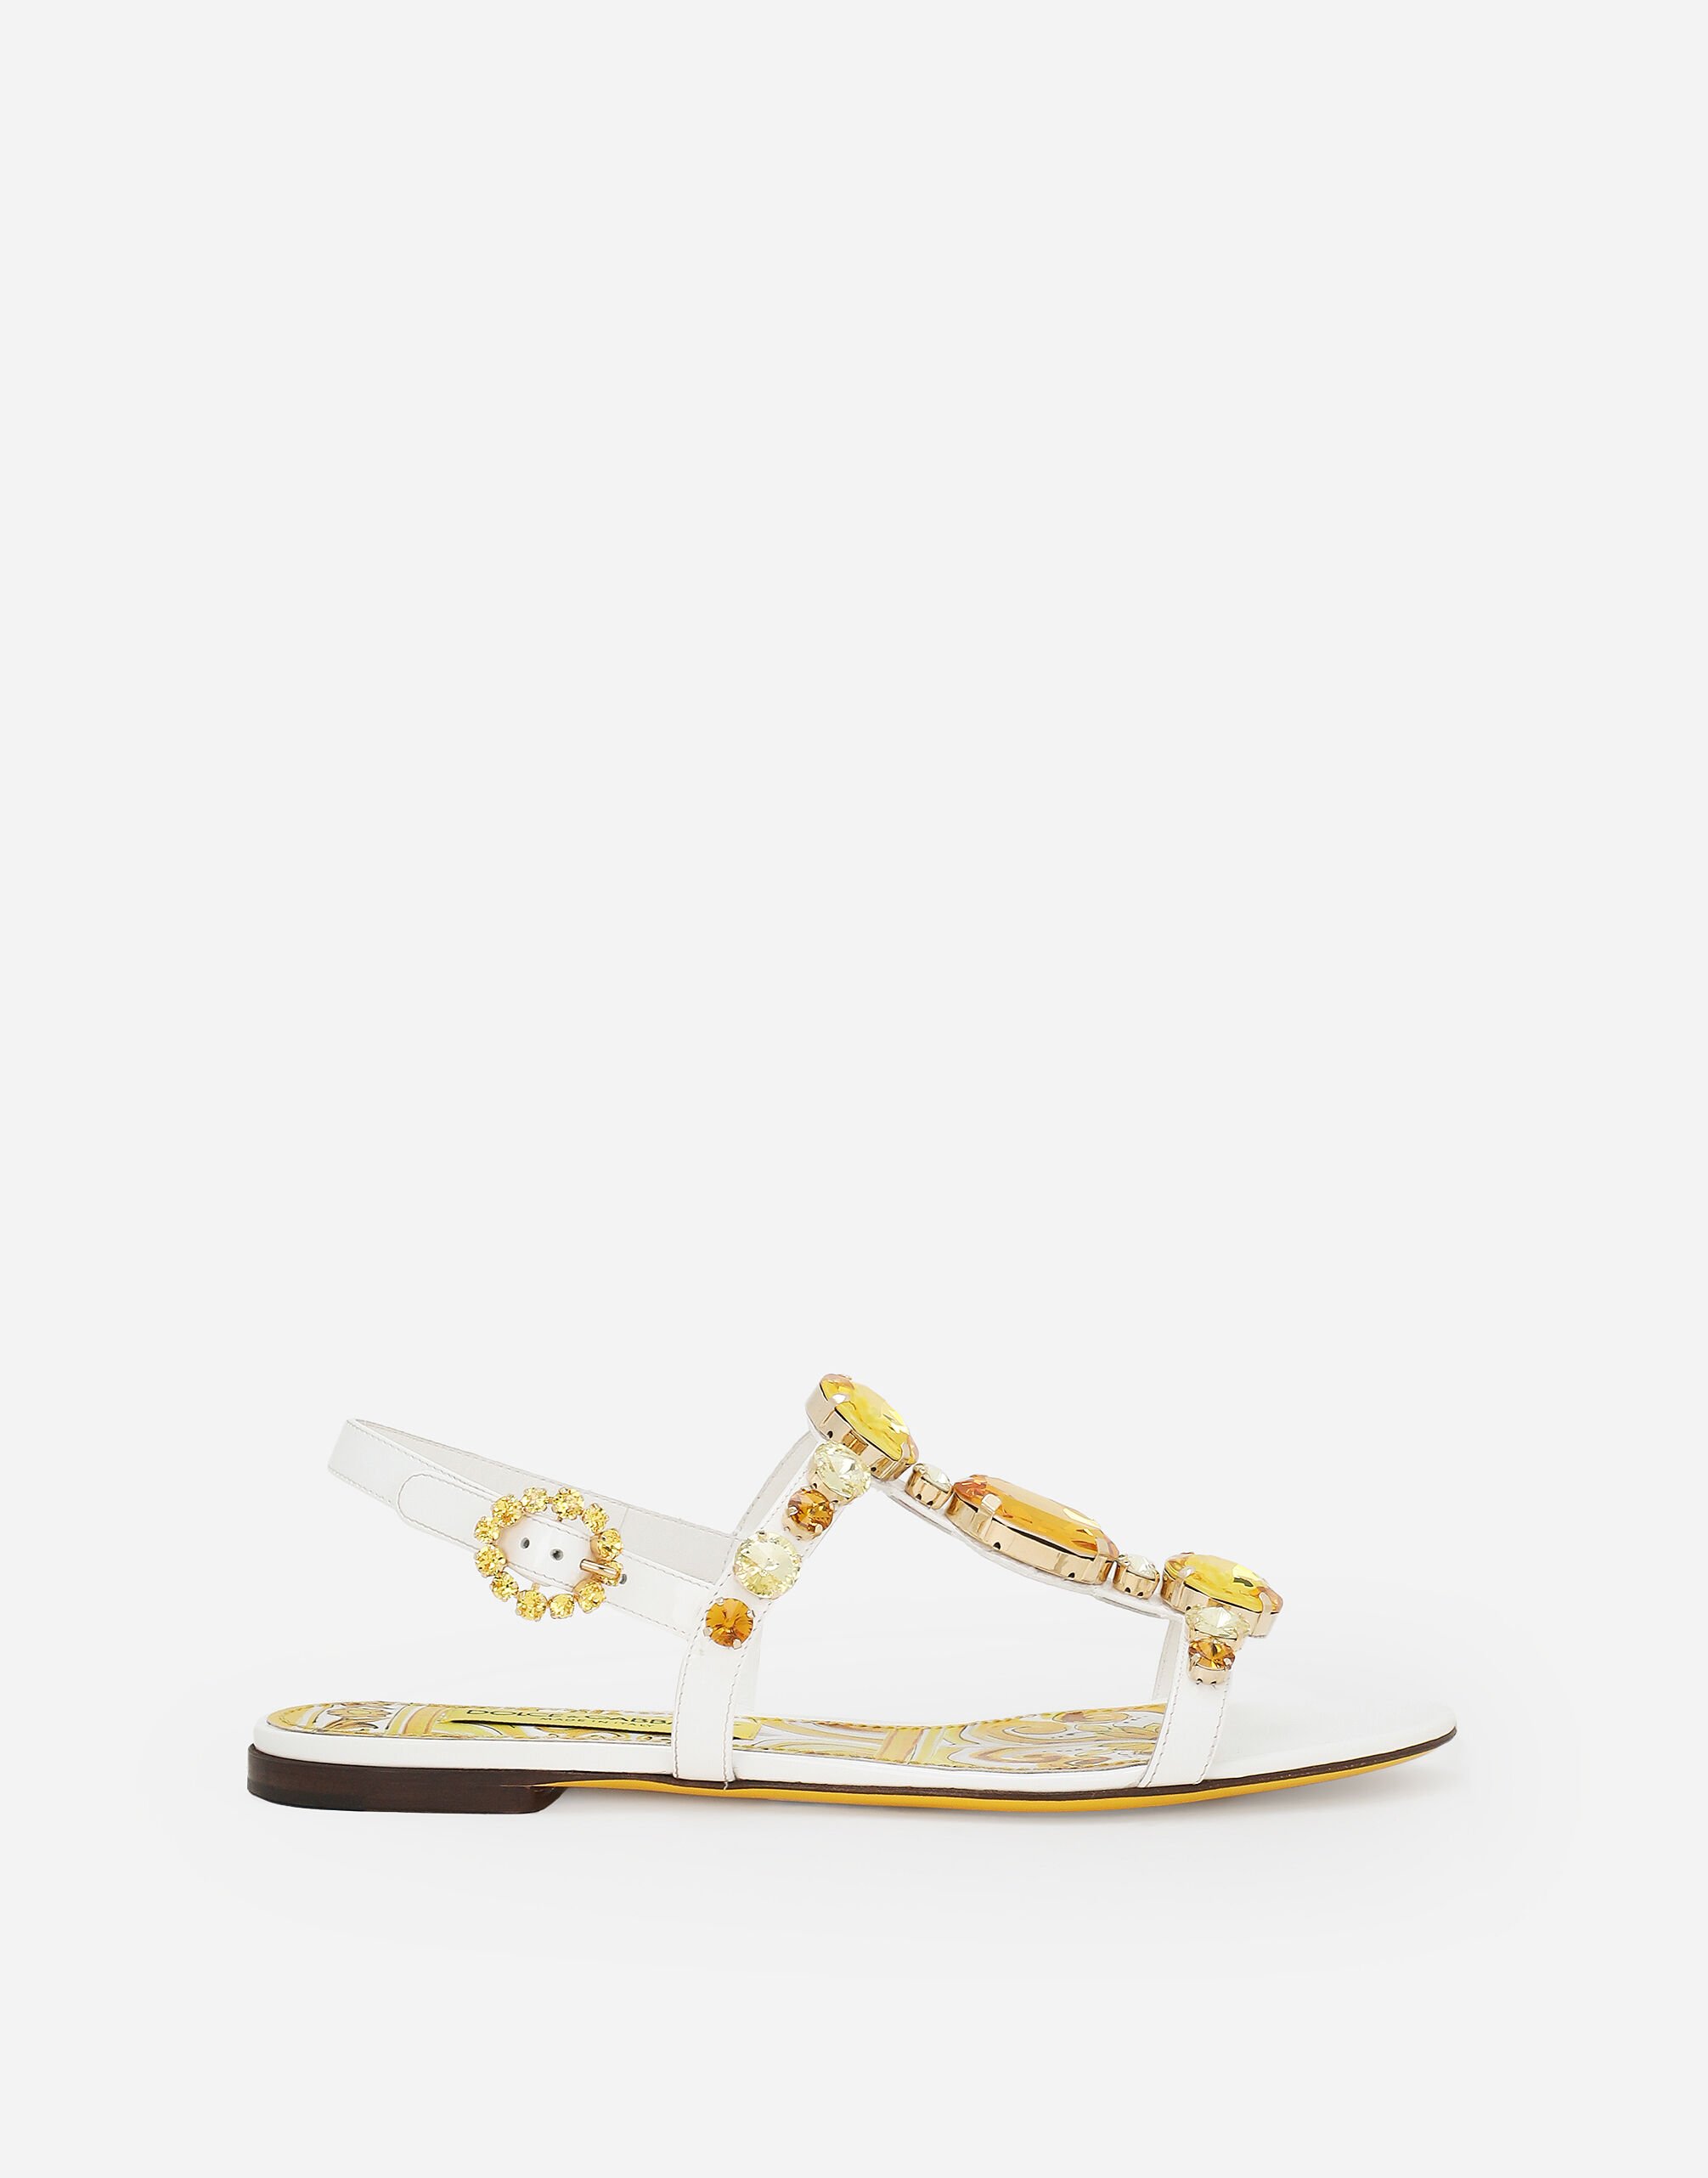 Dolce & Gabbana Patent leather sandals with stone embellishment Print F5S65TFI5JK